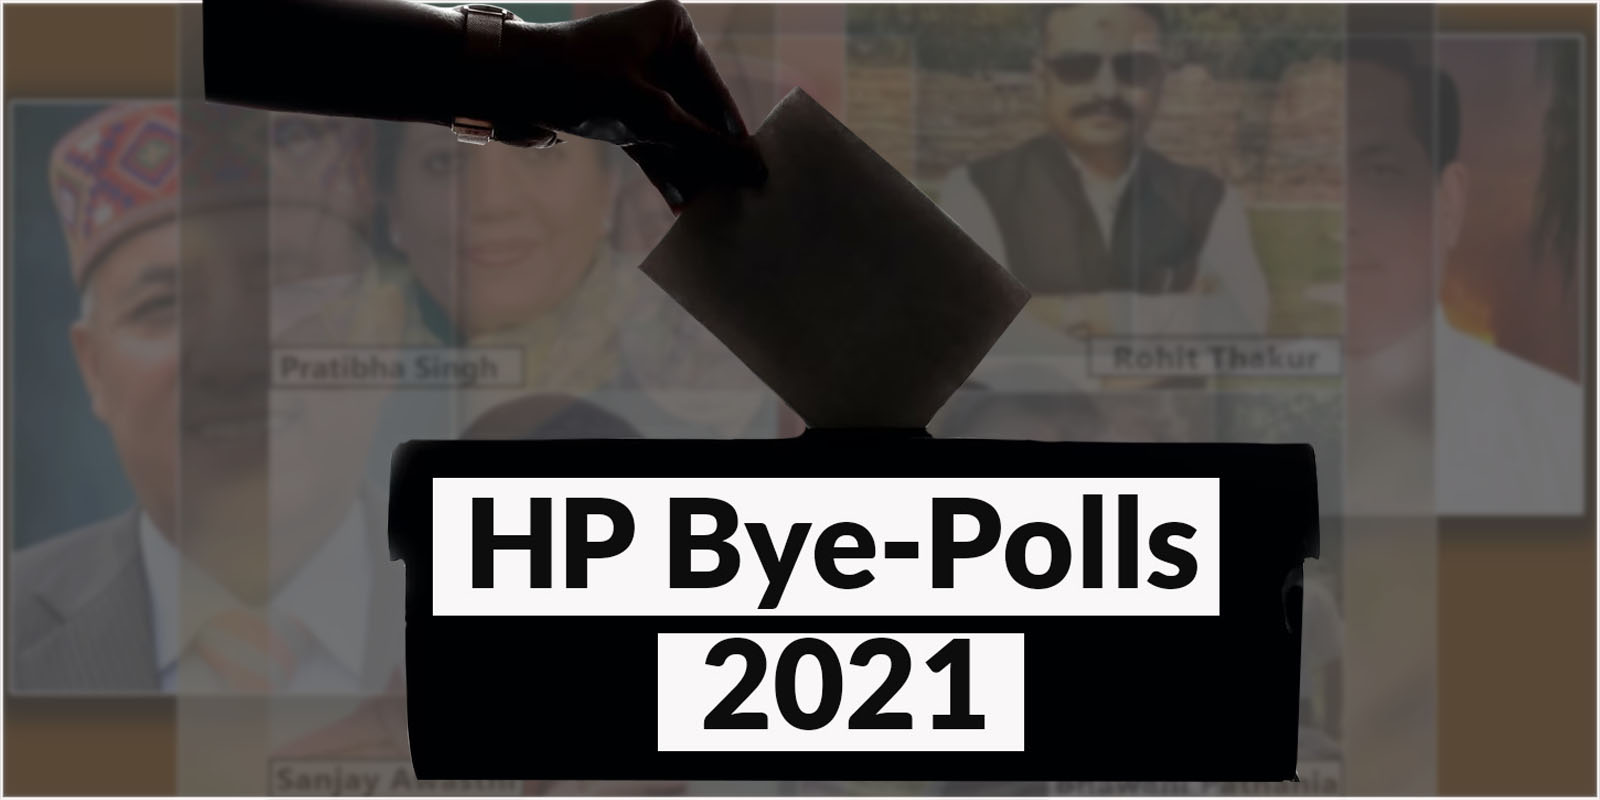 HP bye-Polls 2021 nominations